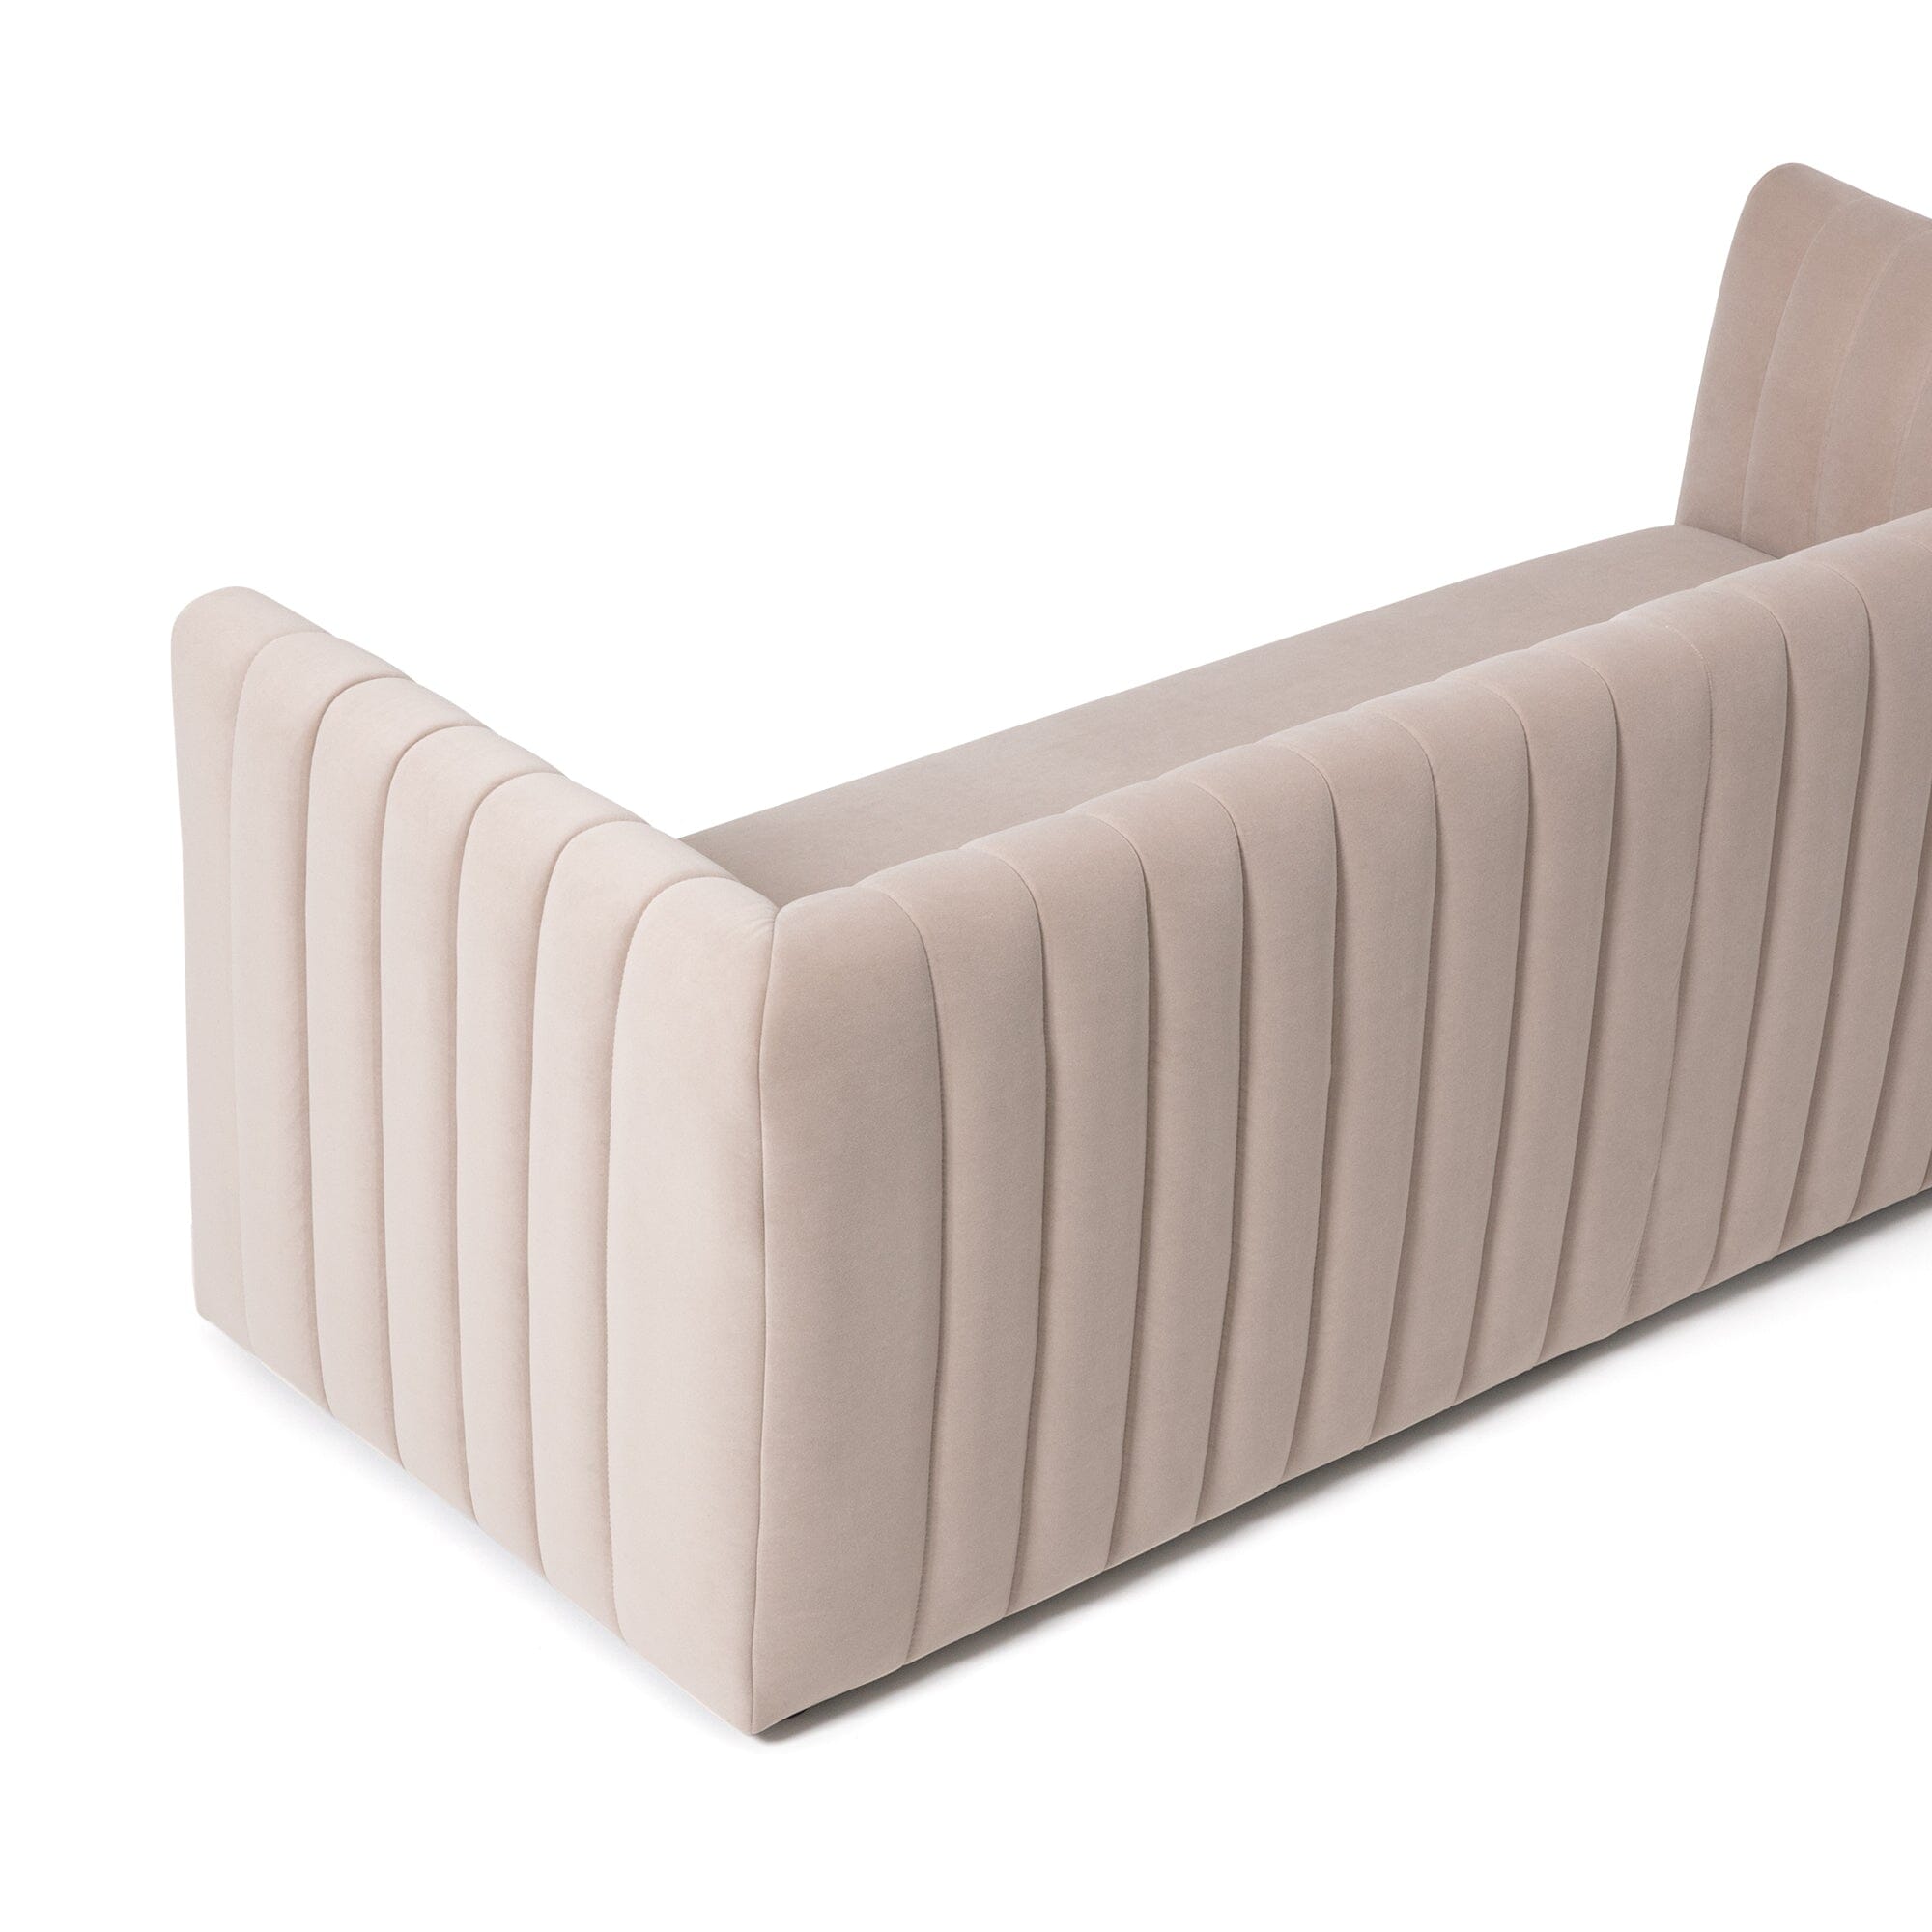 Chouette Sofa 3 Seat  1750 × 700 × 620  Beige